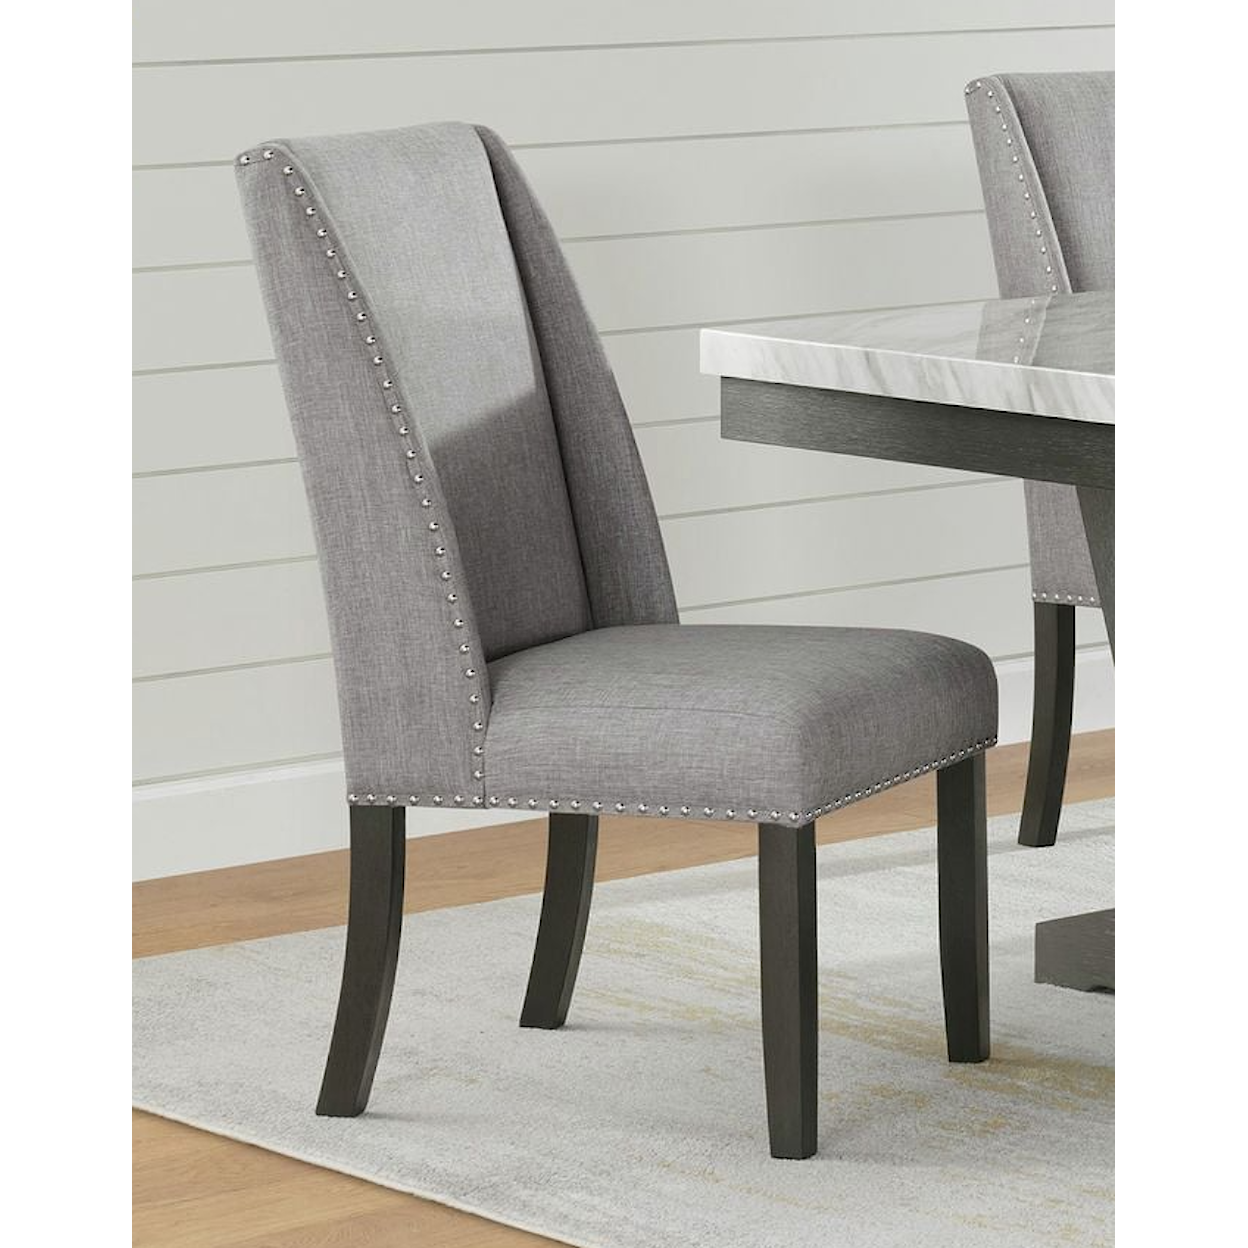 Elements International Everdeen Upholstered Dining Side Chair